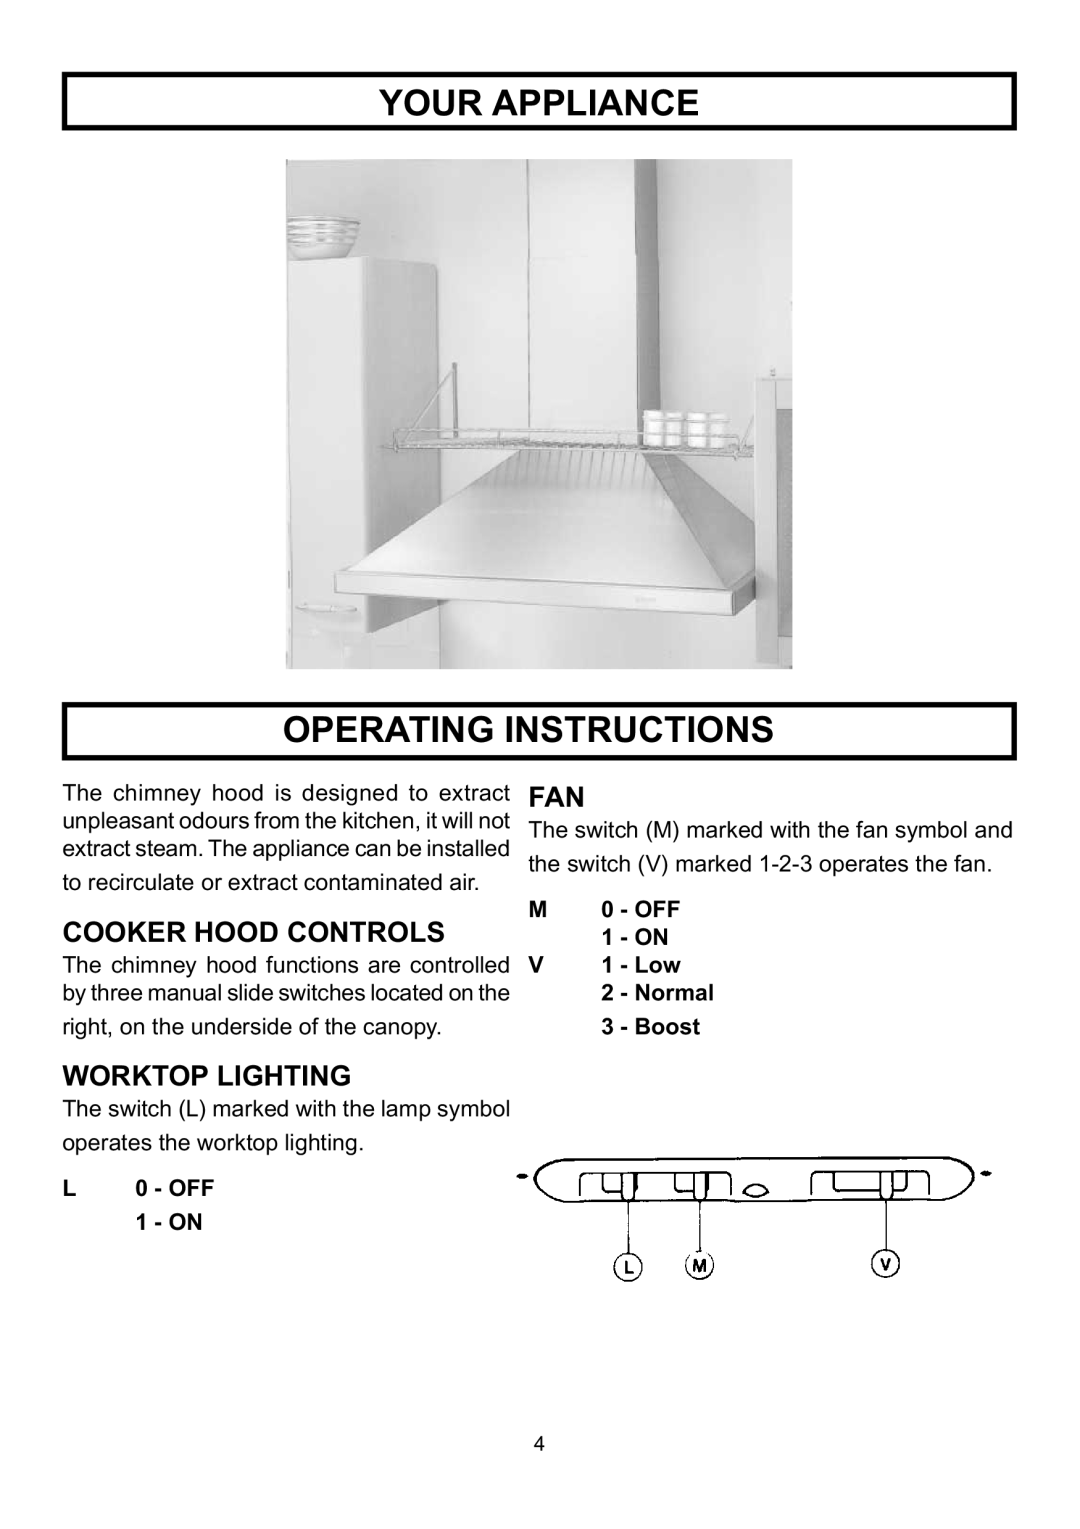 Rangemaster LEIHDC60SC, LEIHDC120BB Your Appliance Operating Instructions, Cooker Hood Controls, Worktop Lighting 